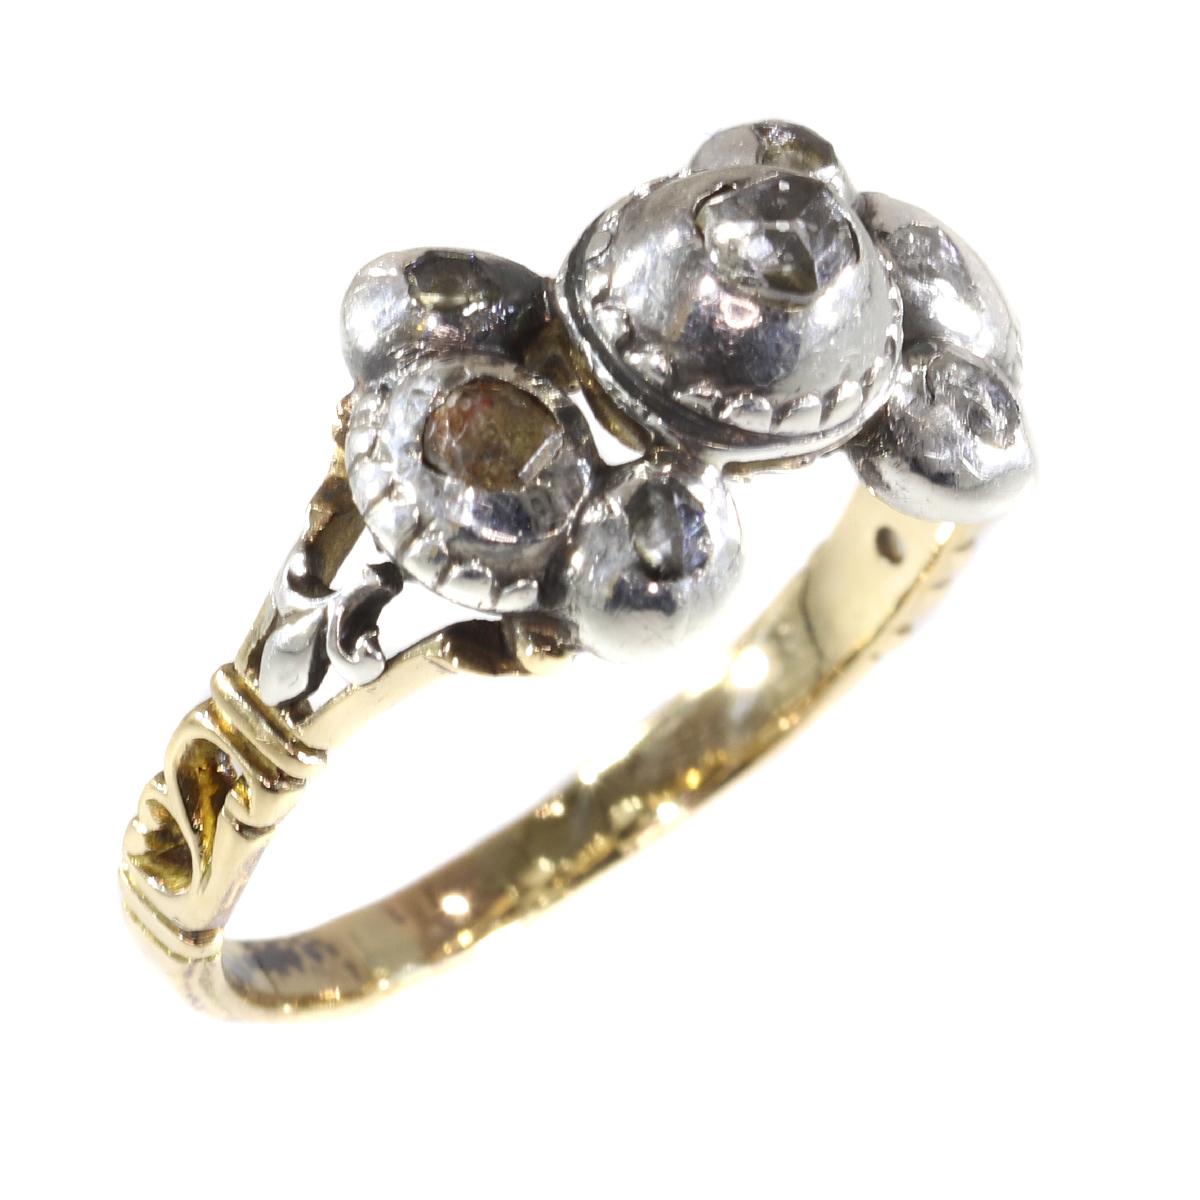 Unique Antique Baroque / Rococo Diamond Engagement Ring, 1700s For Sale 1